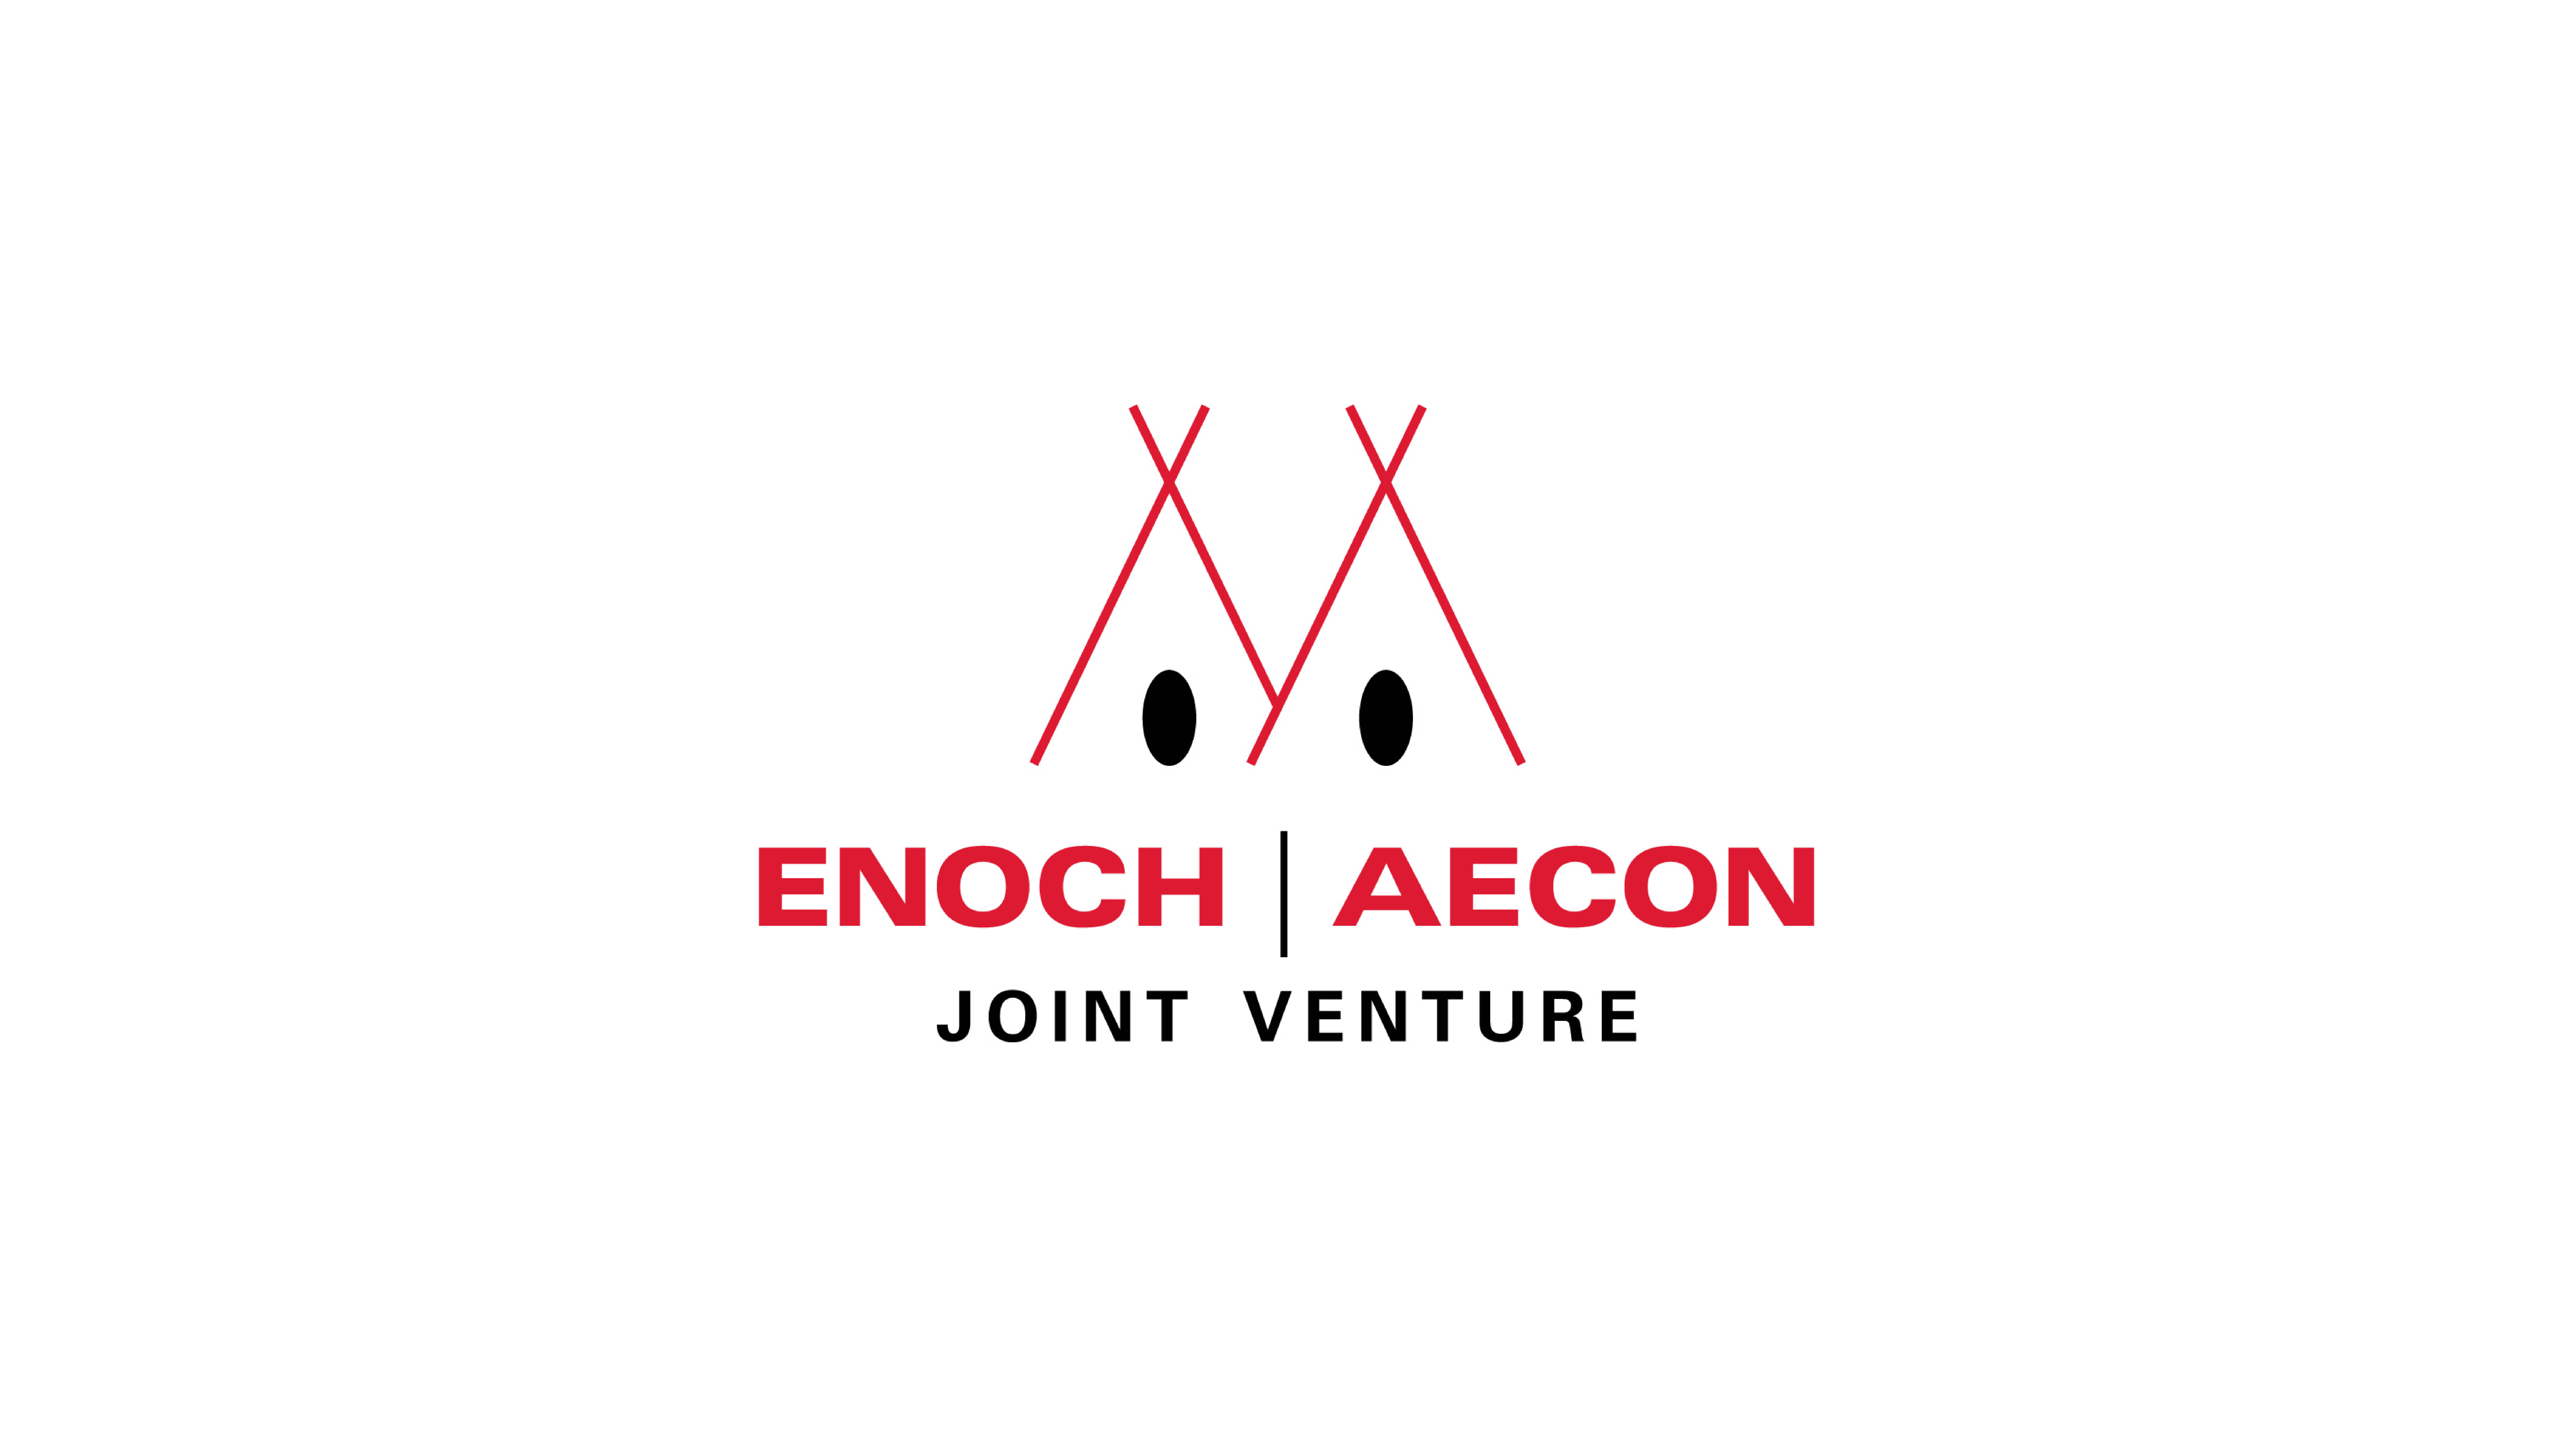 Enoch-Aecon Joint Venture